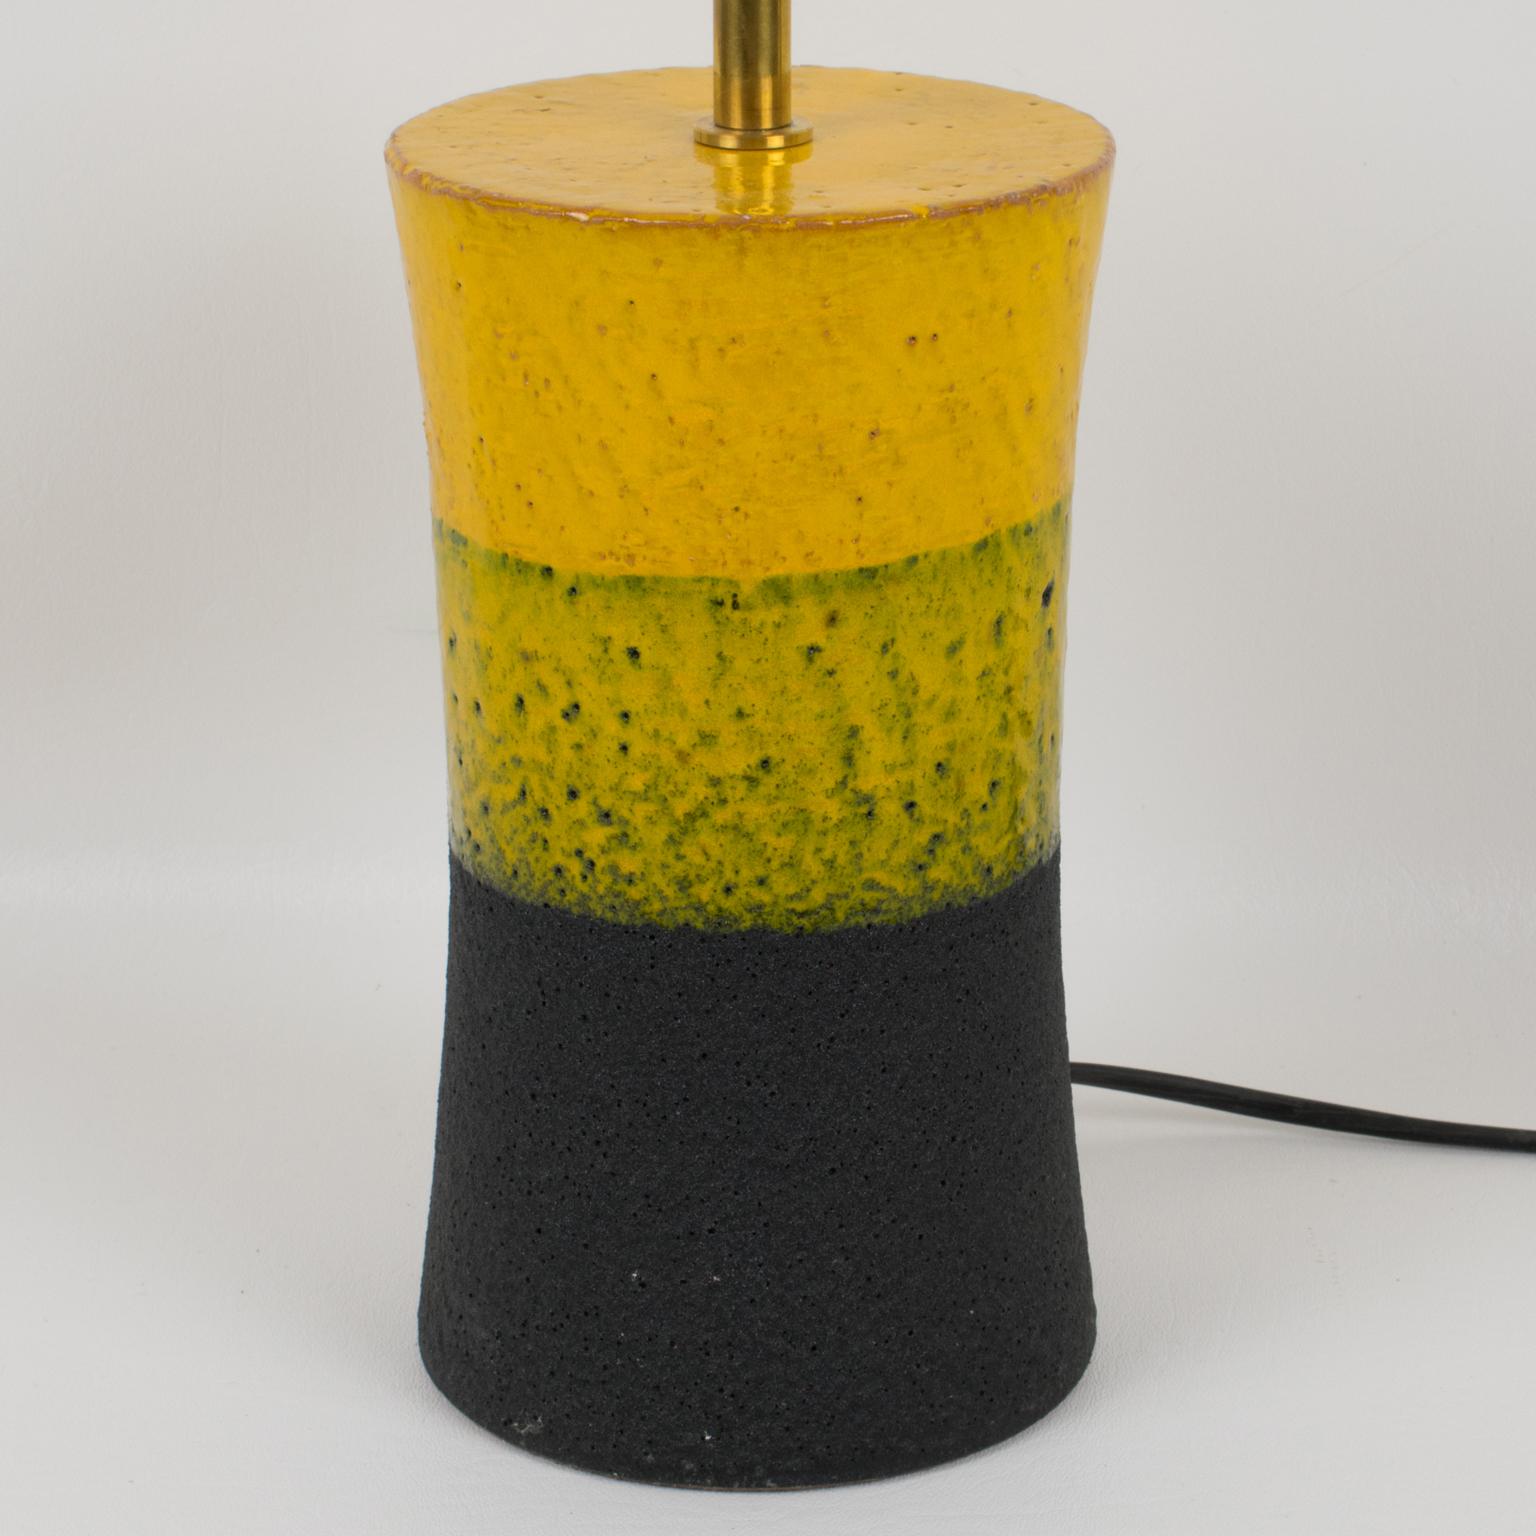 Aldo Londi for Bitossi Italy Mondrian Design Ceramic Table Lamp, 1960s 1